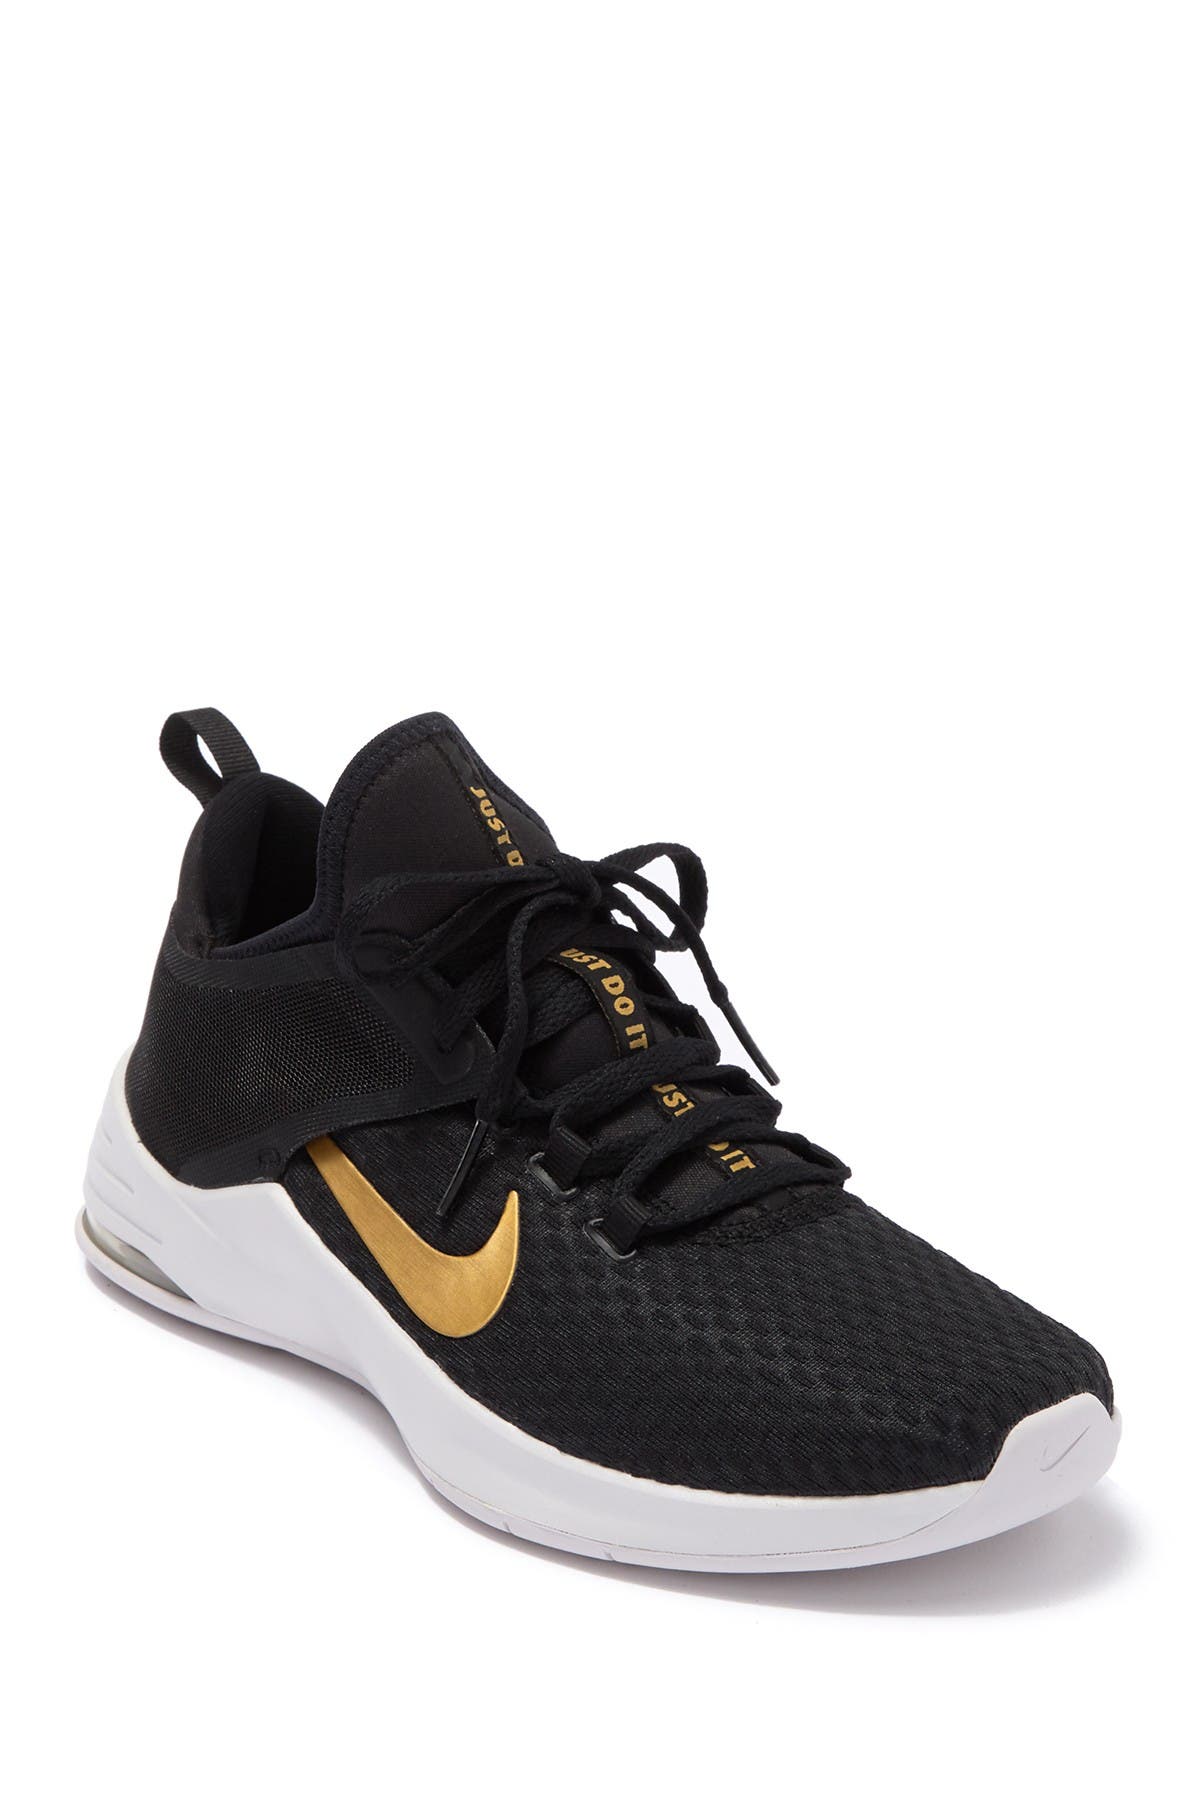 Nike | Air Max Bell Training Shoe 2 